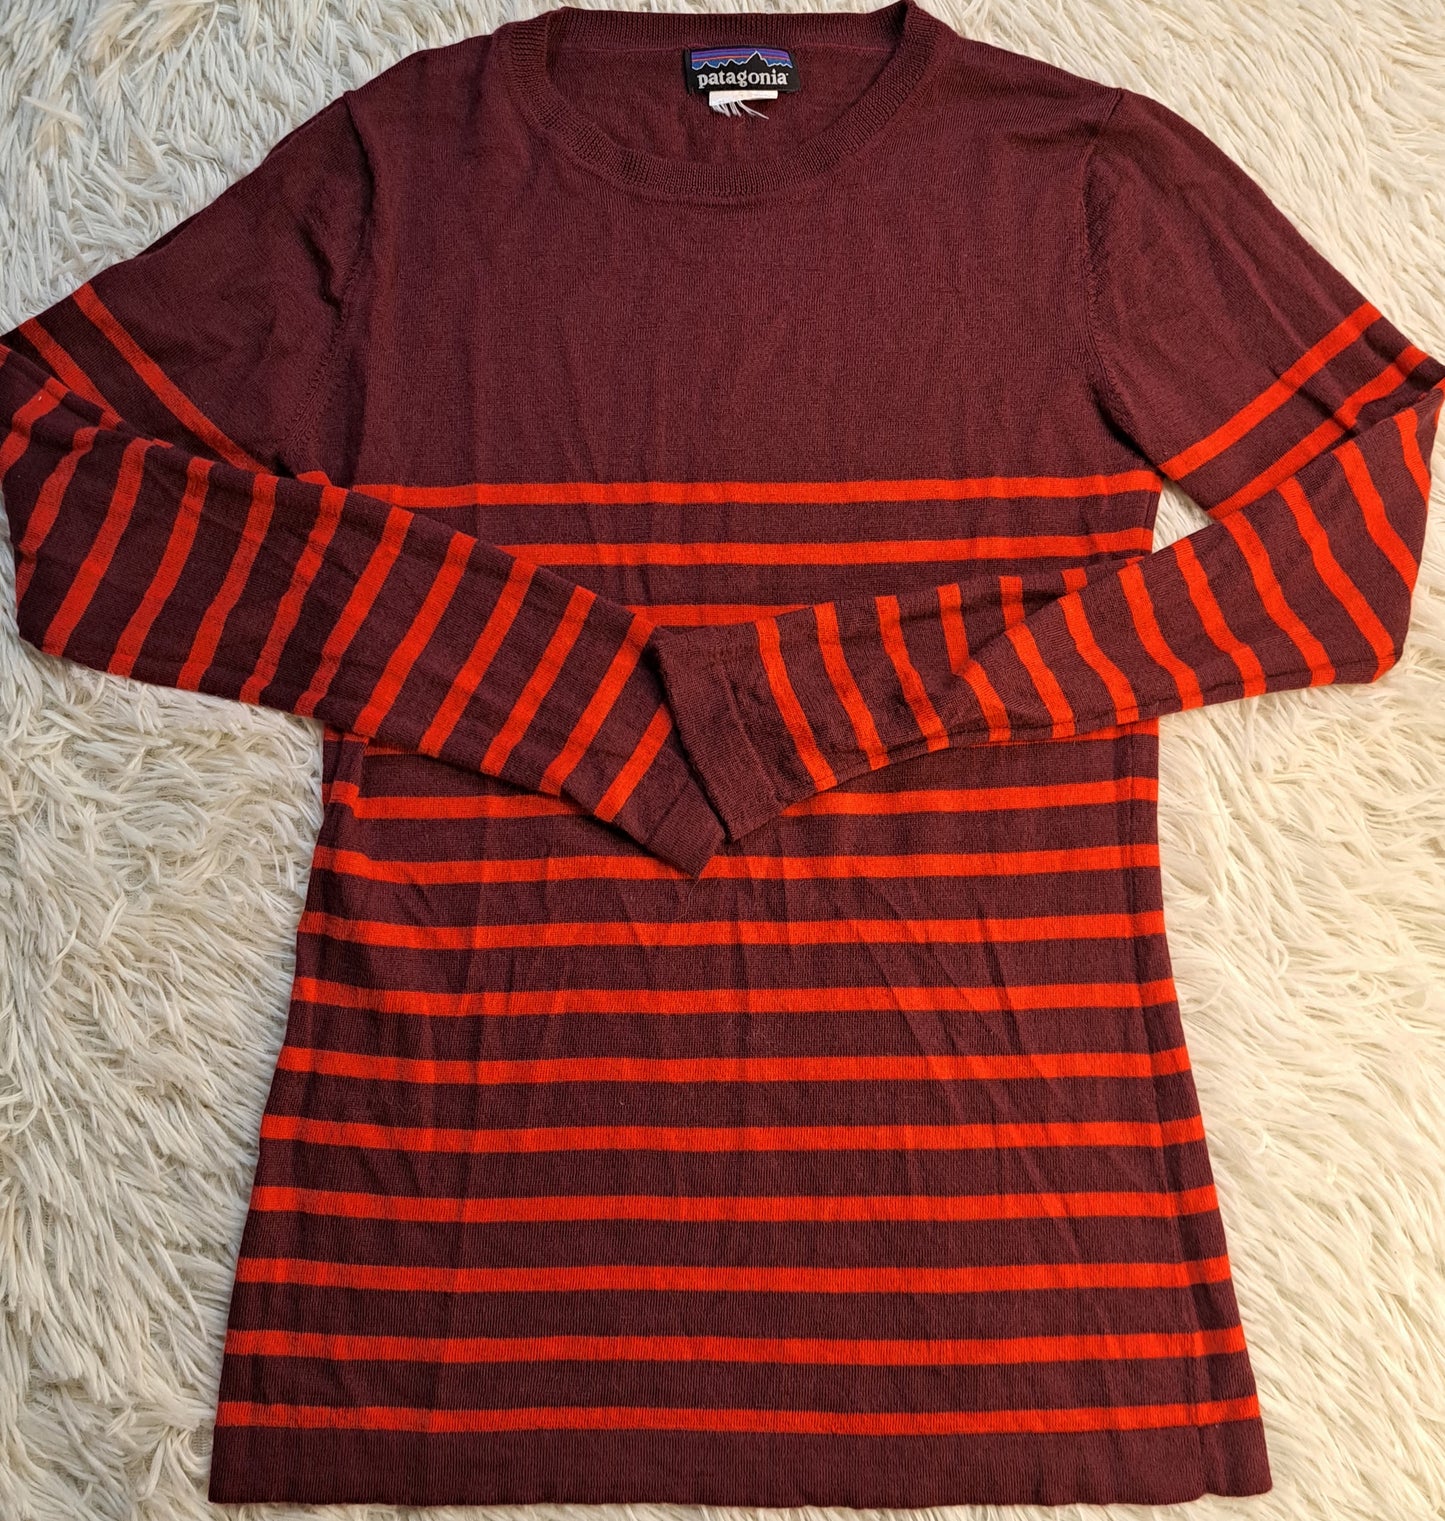 Patagonia long sleeve shirt - medium